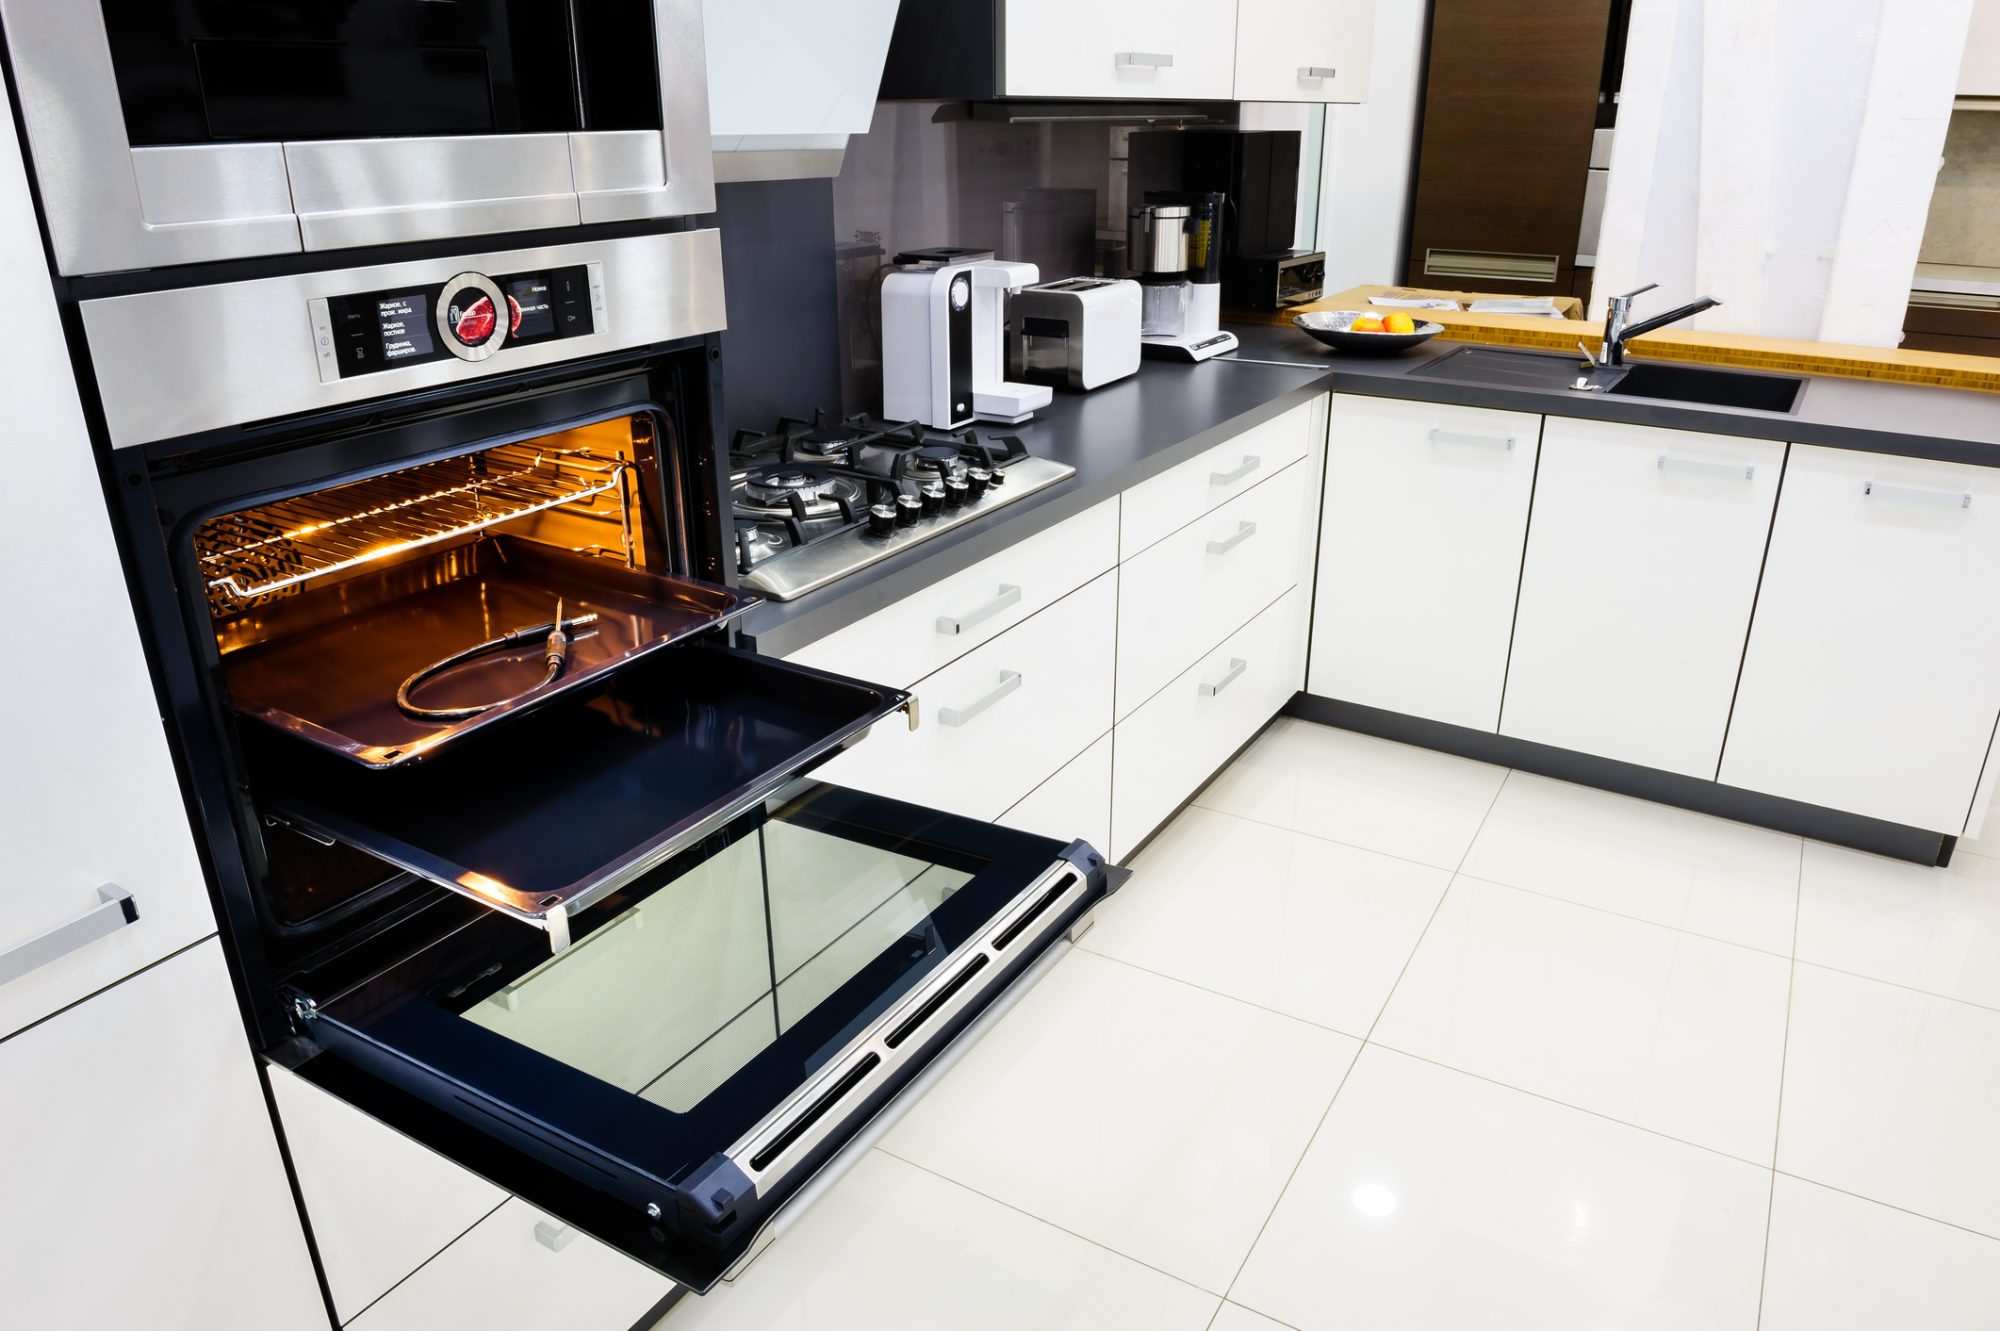 Modern luxury hi-tek black and white kitchen, clean interior design, focu at oven with open door